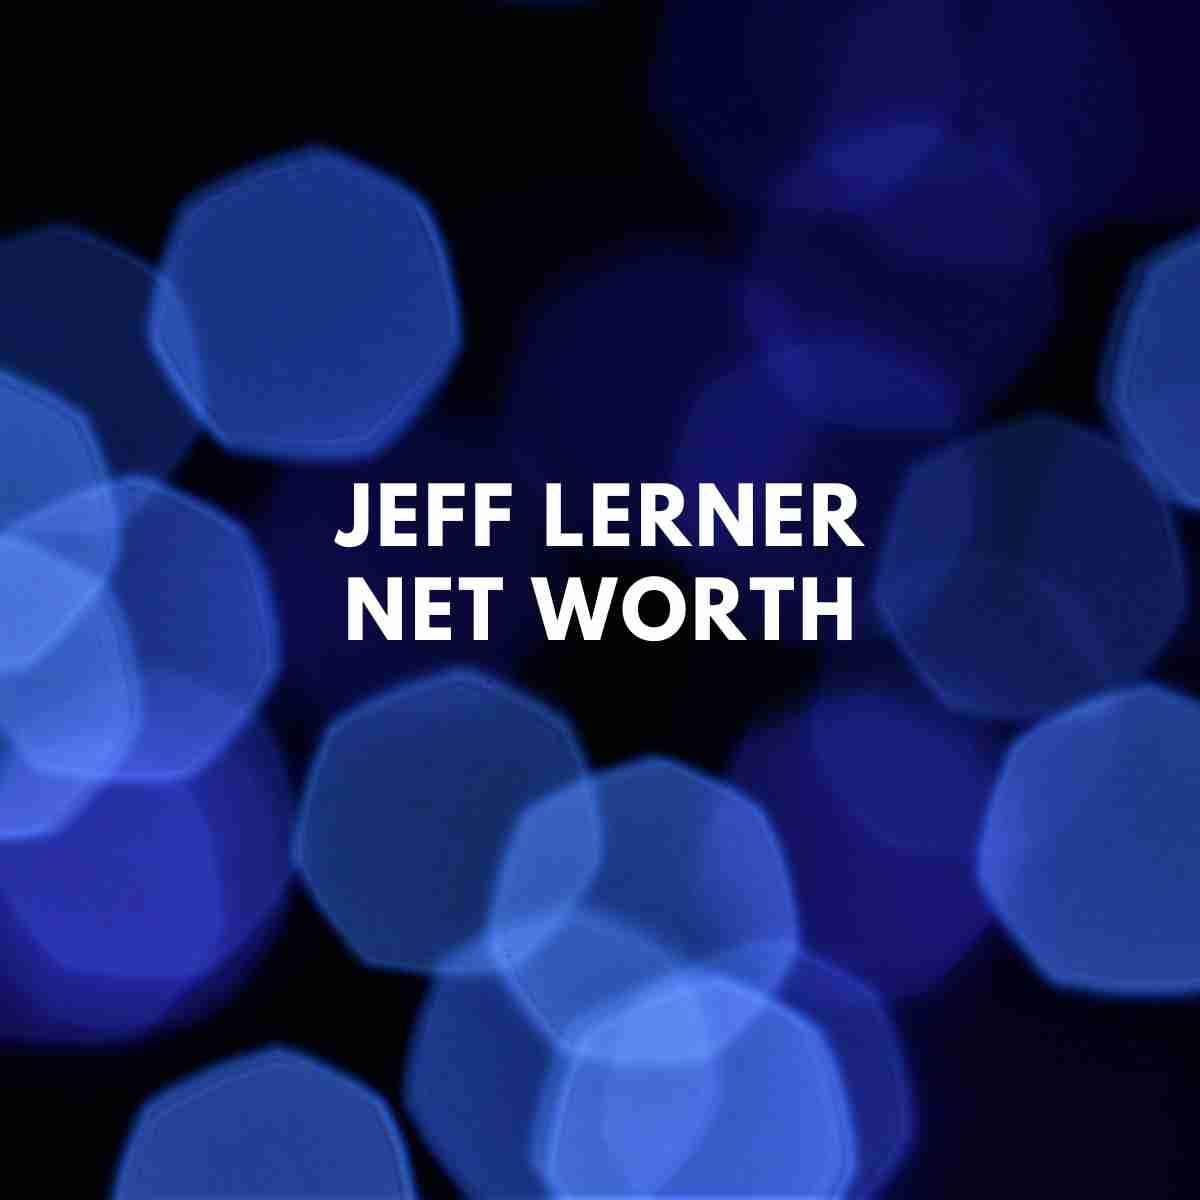 Jeff Lerner net worth